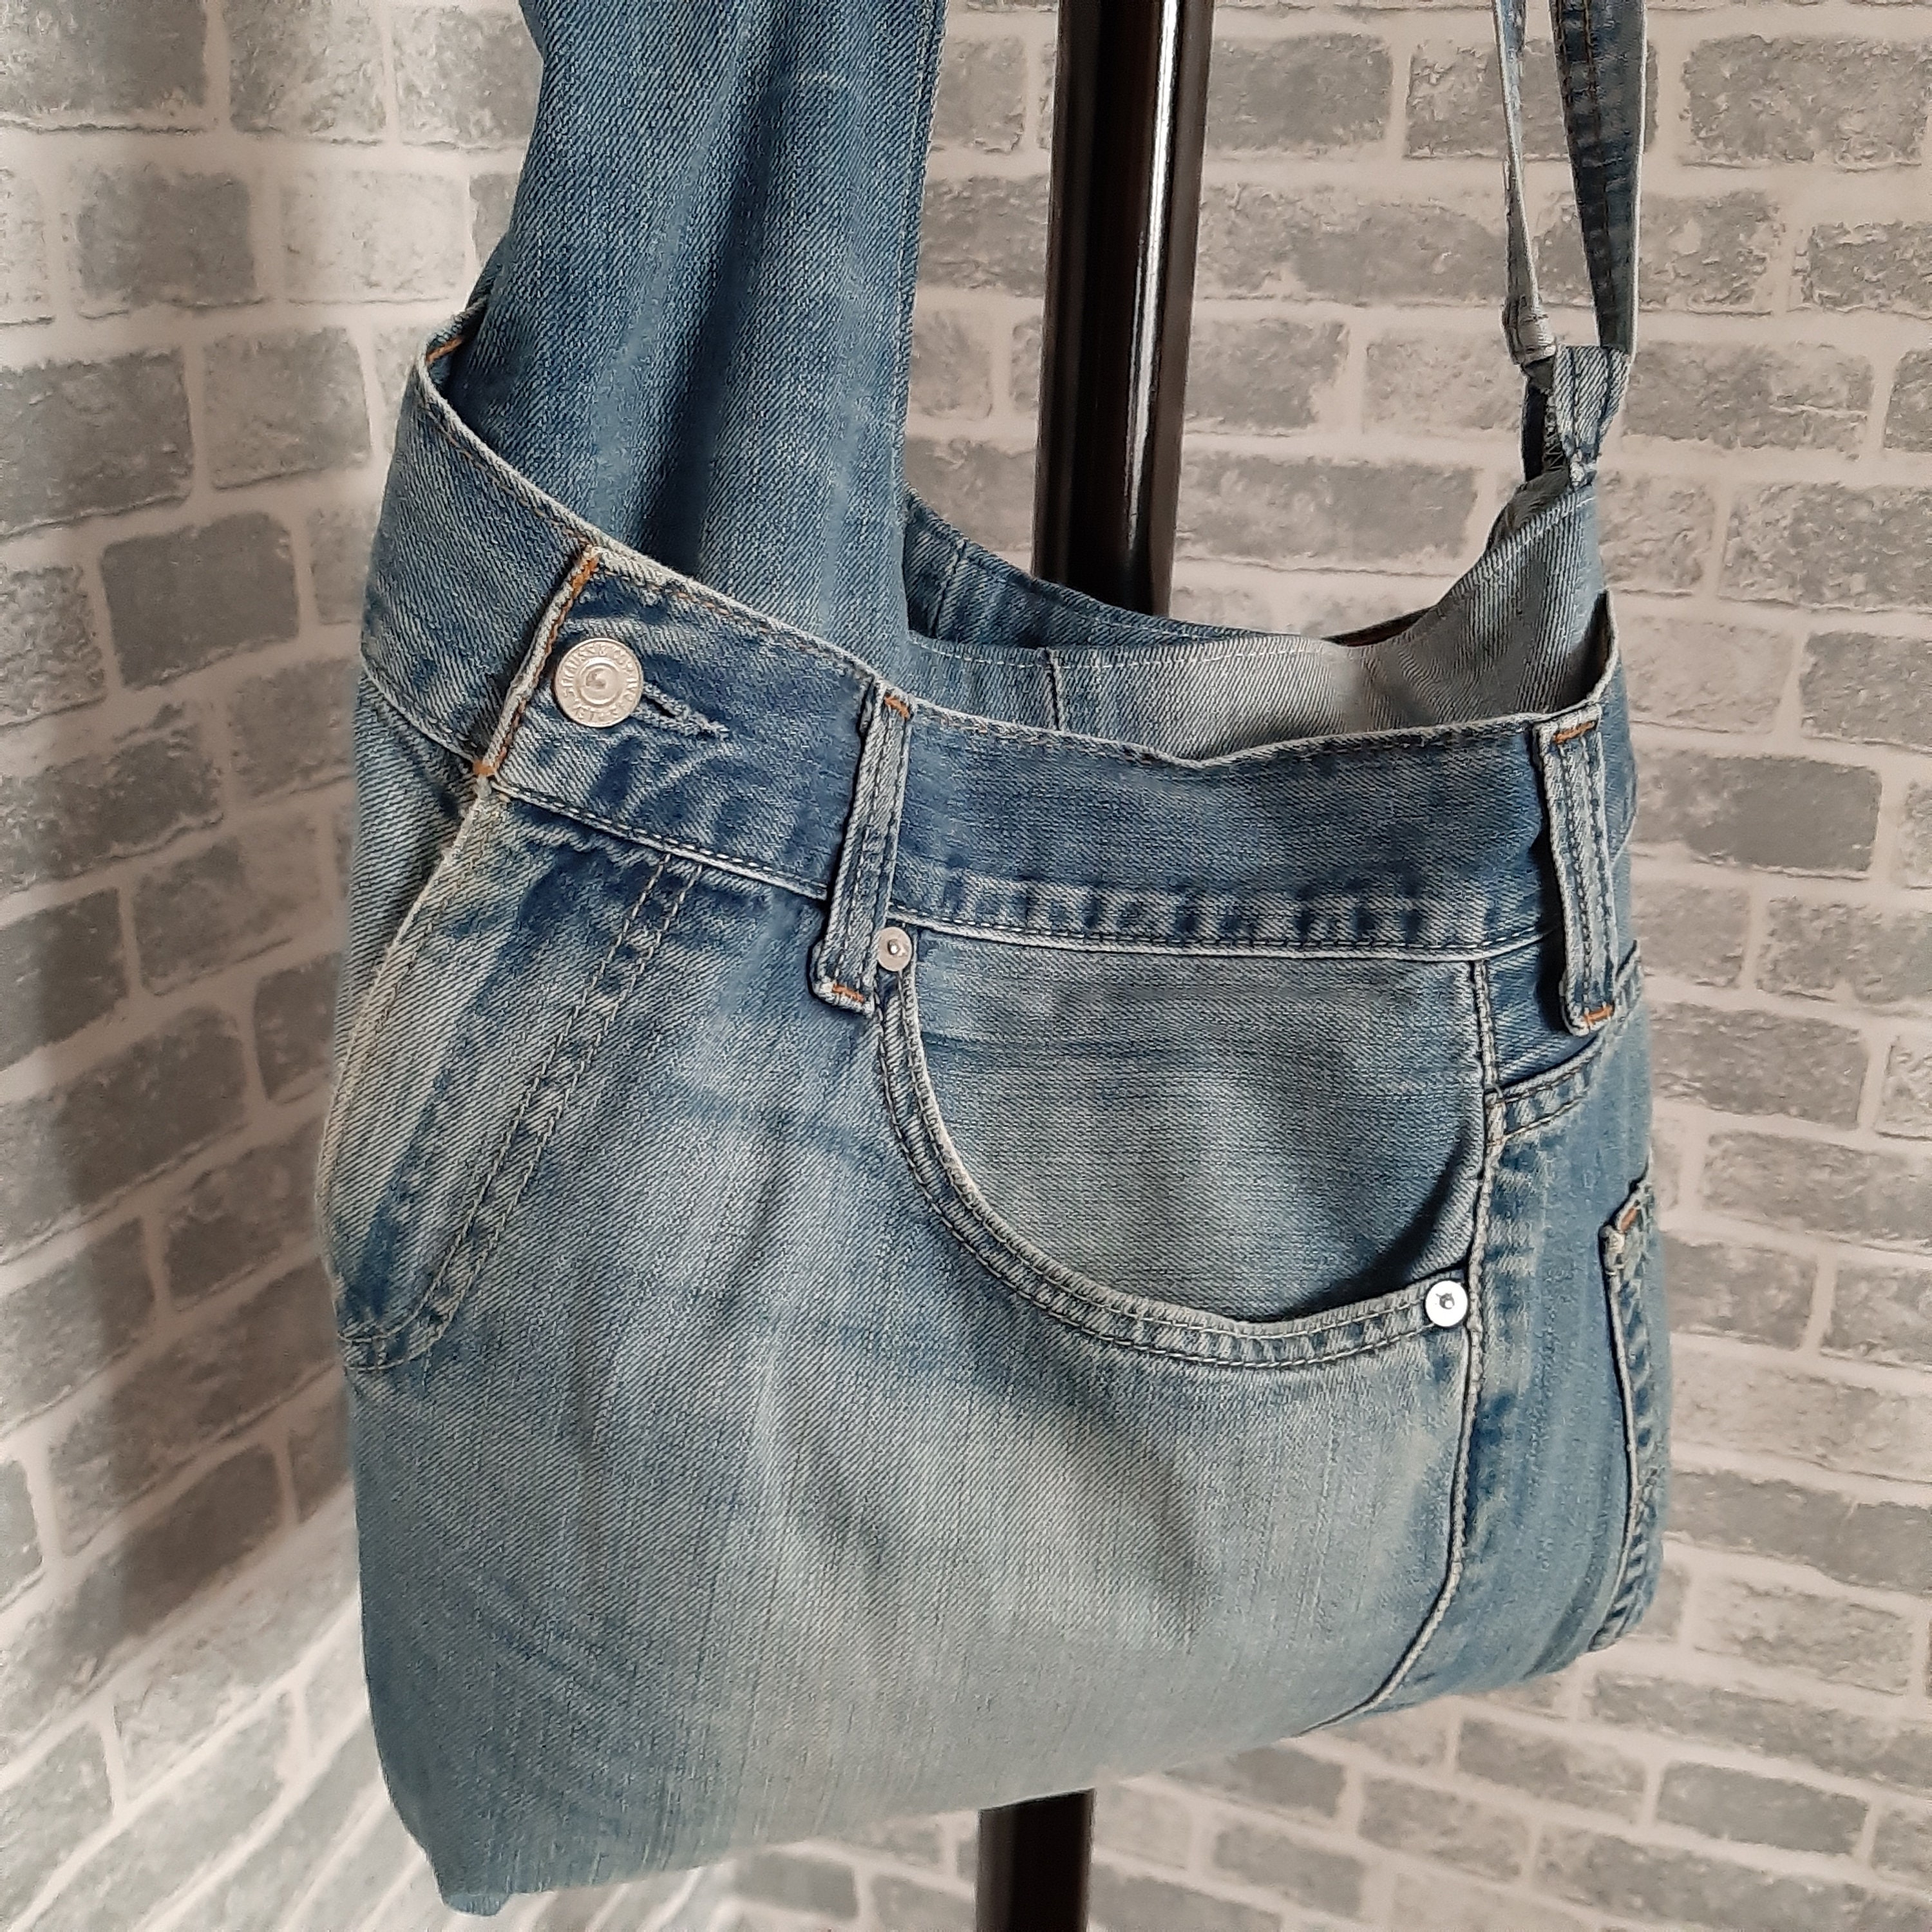 Hobo denim bag Jean shoulder bag Casual tote bag of jeans | Etsy